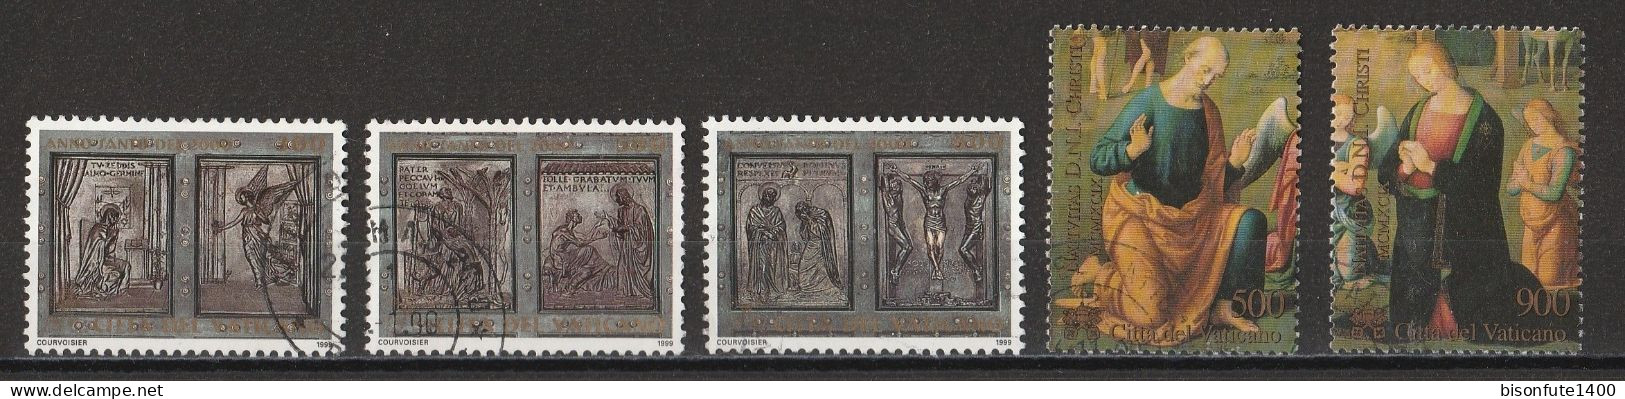 Vatican 1999 : Timbres Yvert & Tellier N° 1162 - 1164 - 1166 - 1177 - 1178 - 1179 Et 1180 Oblitérés - Gebraucht